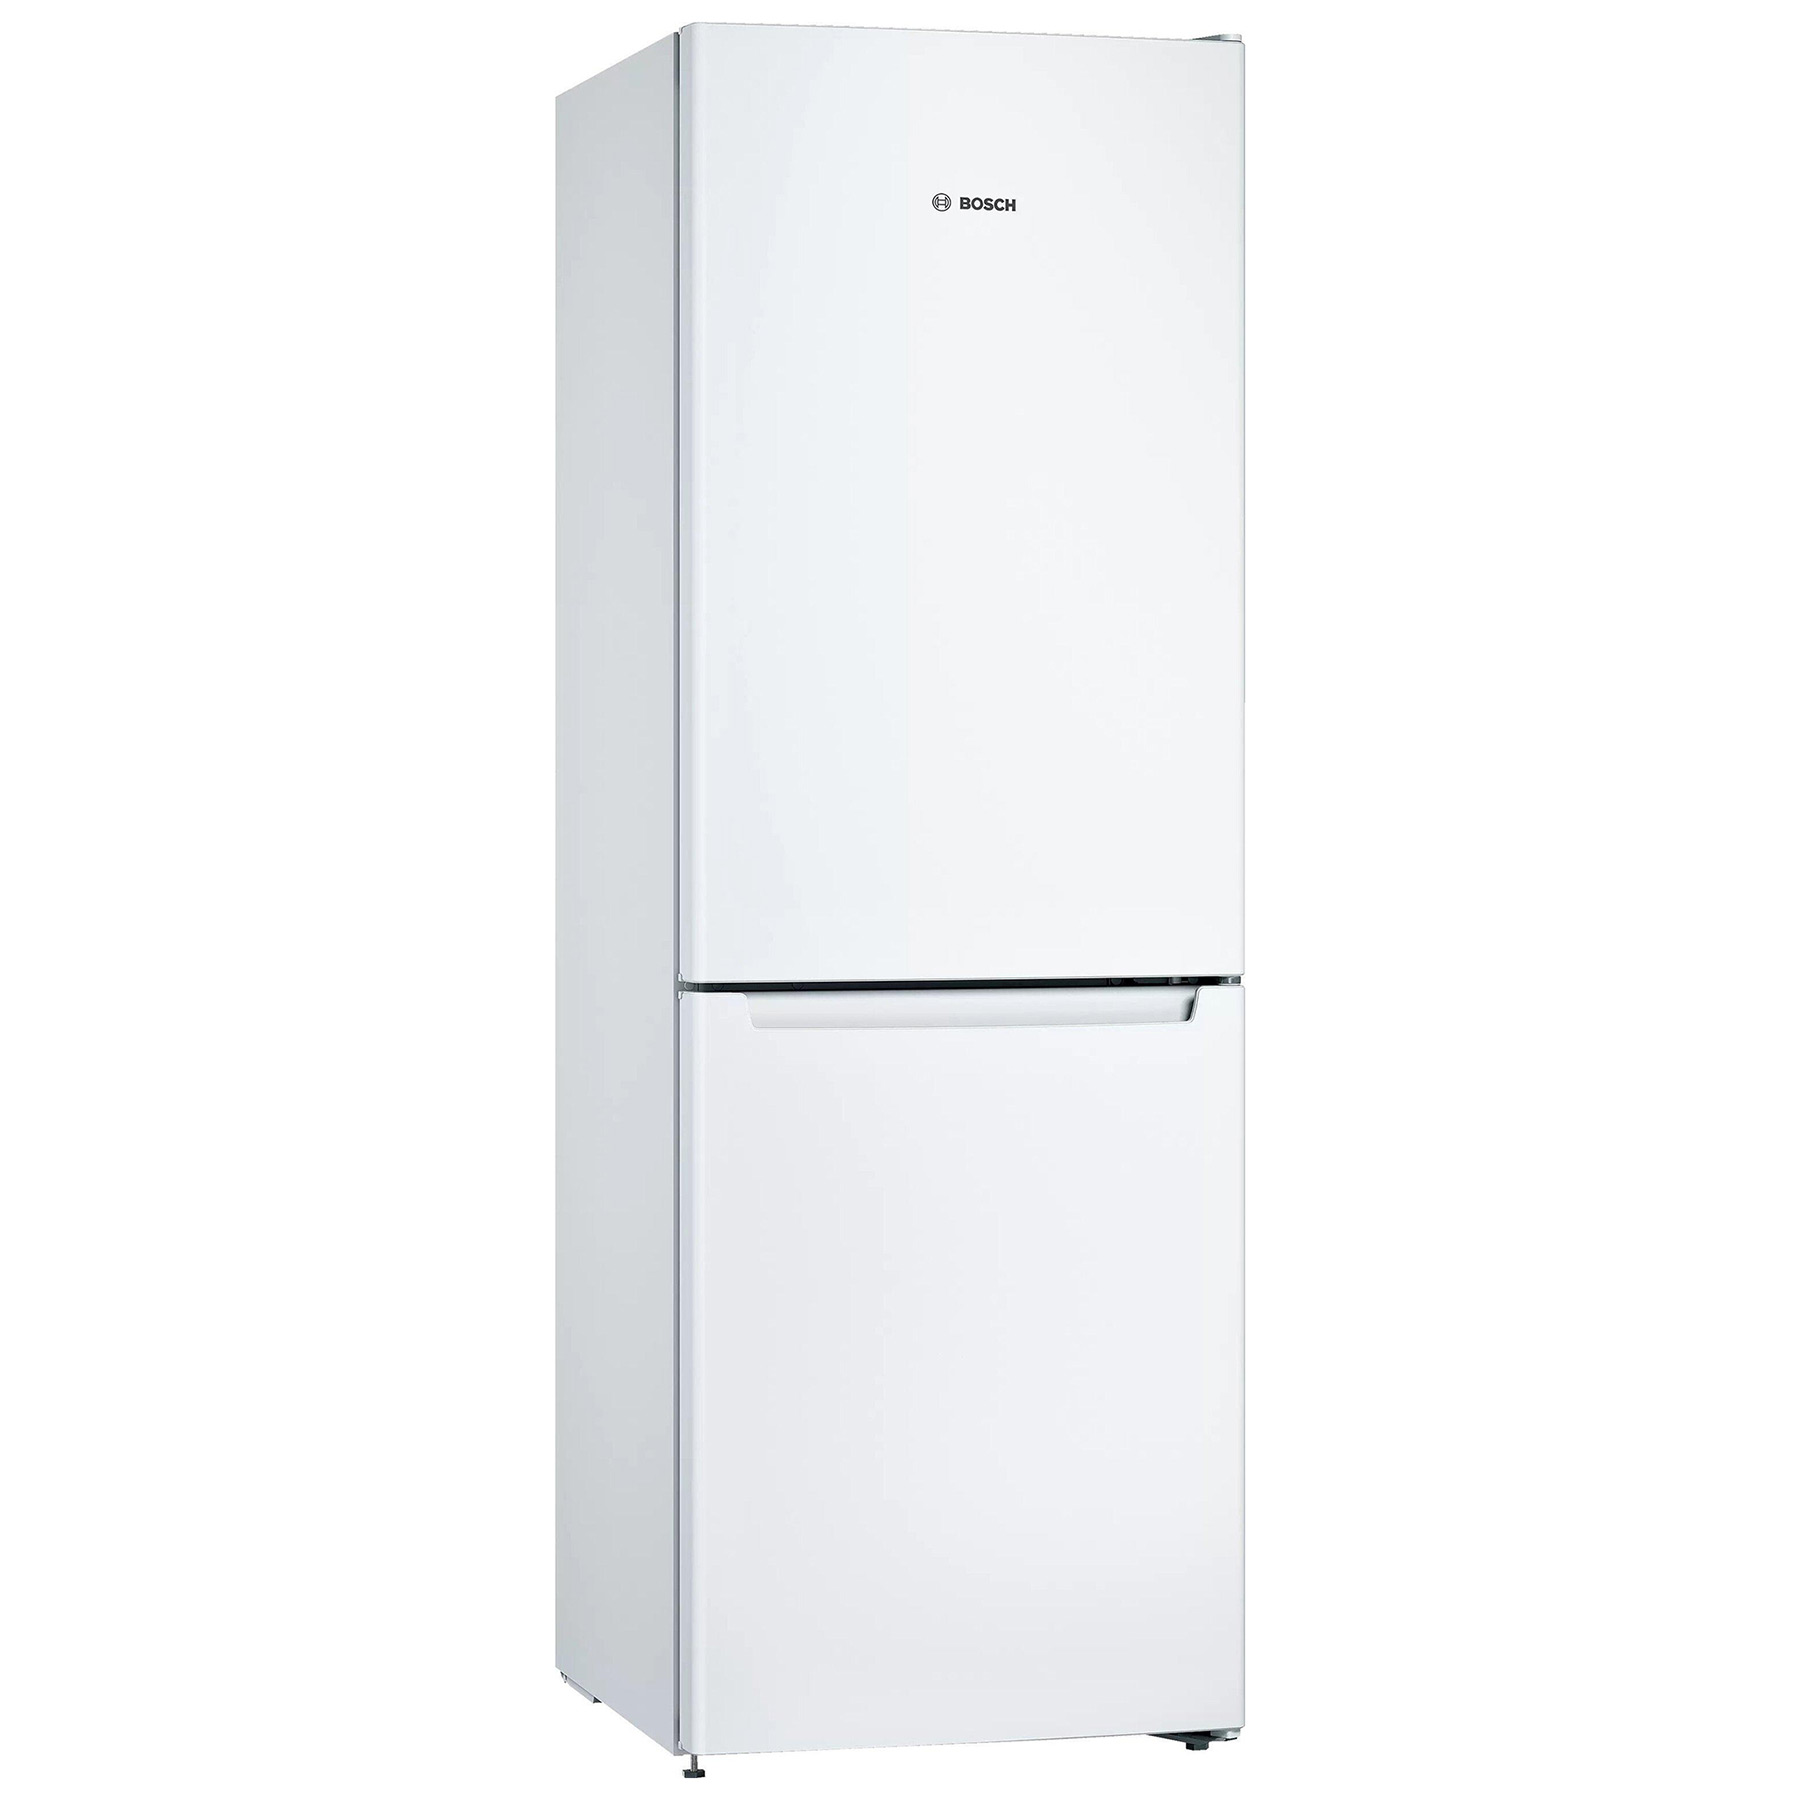 Bosch KGN33NWEAG Series 2 60cm Frost Free Fridge Freezer White 1 76m E